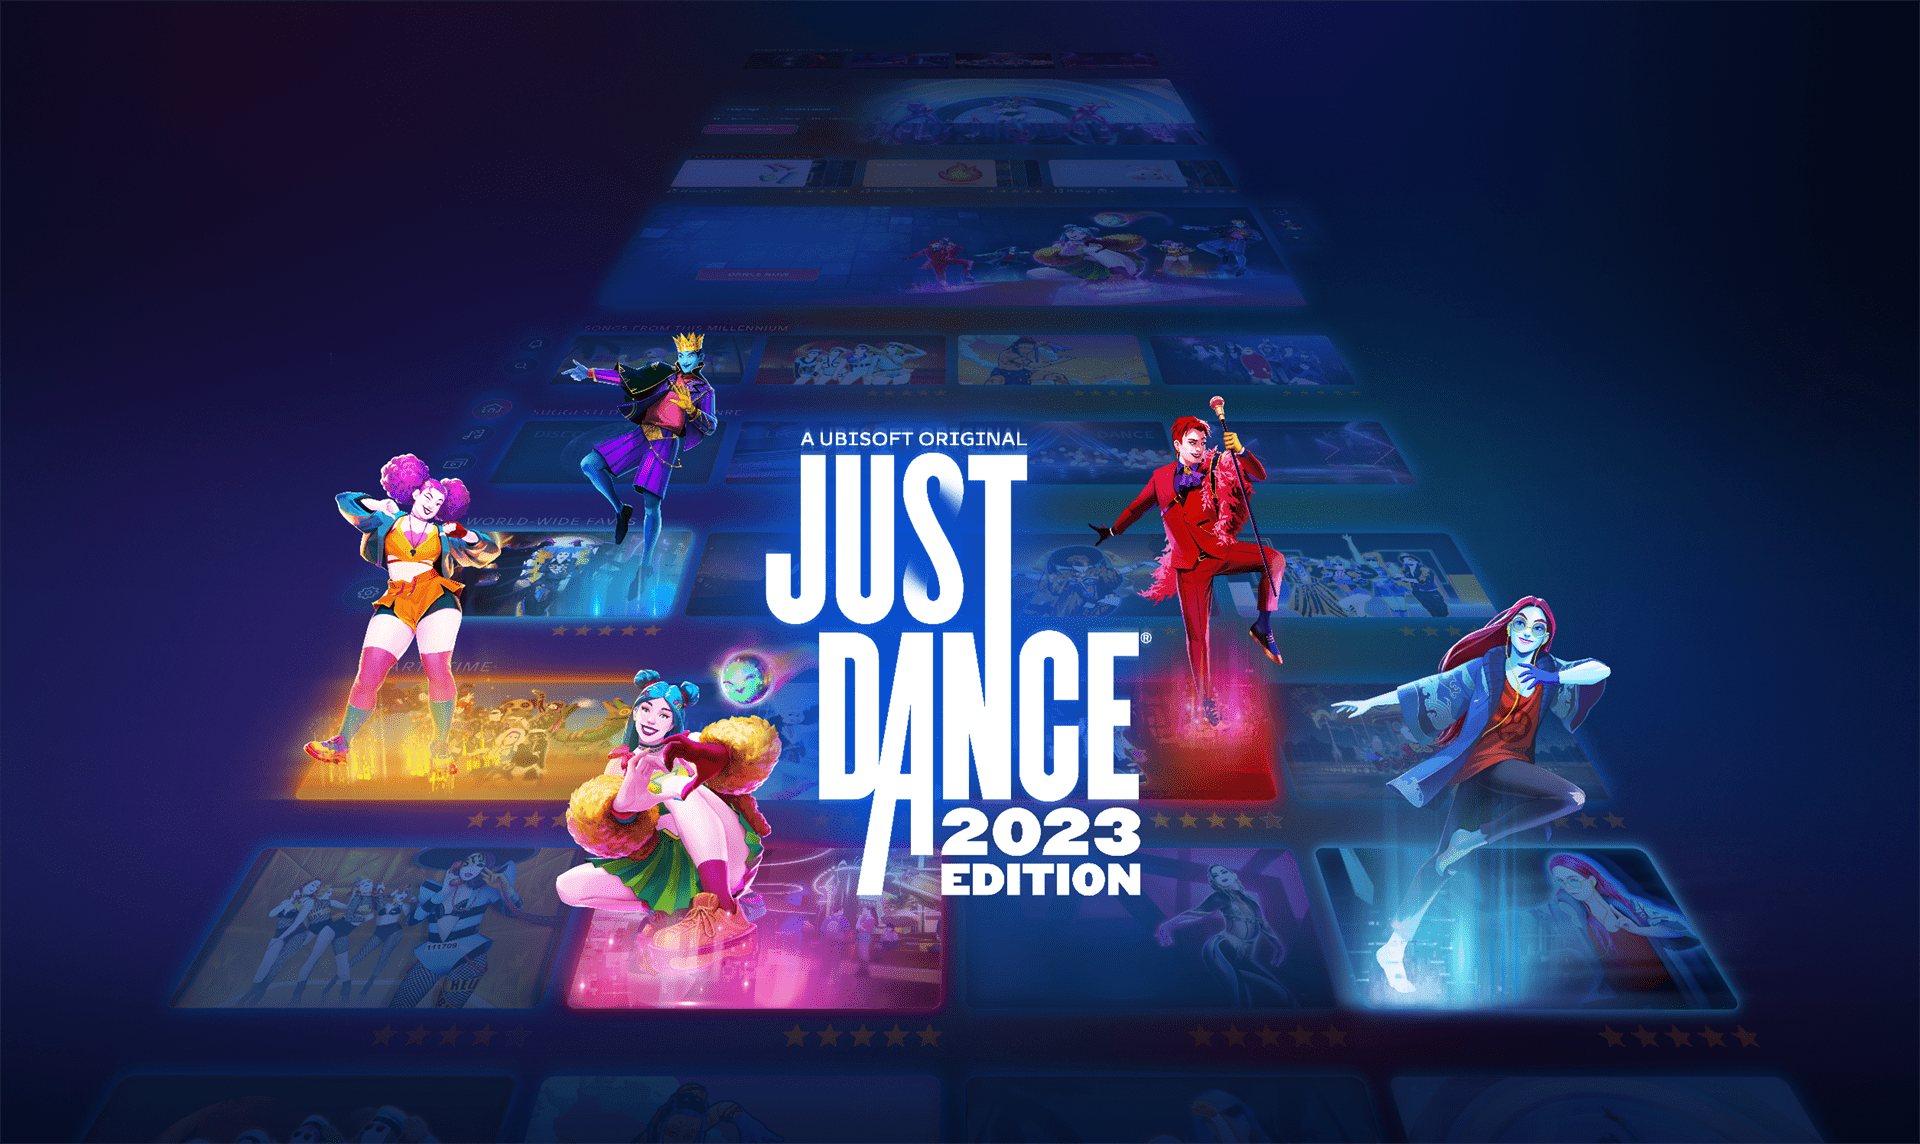 《Just Dance 舞力全开 2023》今日正式登场 收录全新介面与线上多人游玩要素